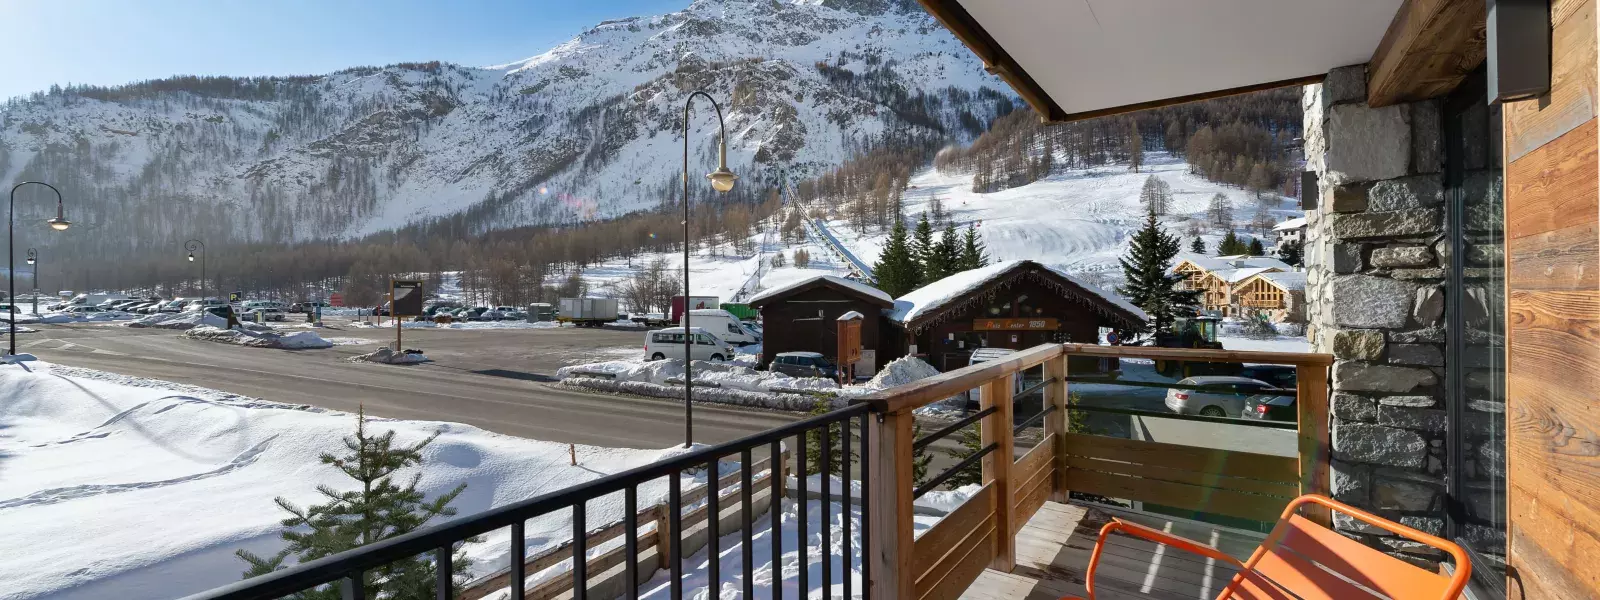 Appartement Blanchot 7 - Location chalets Covarel - Val d'Isère Alpes - France - Terrasse